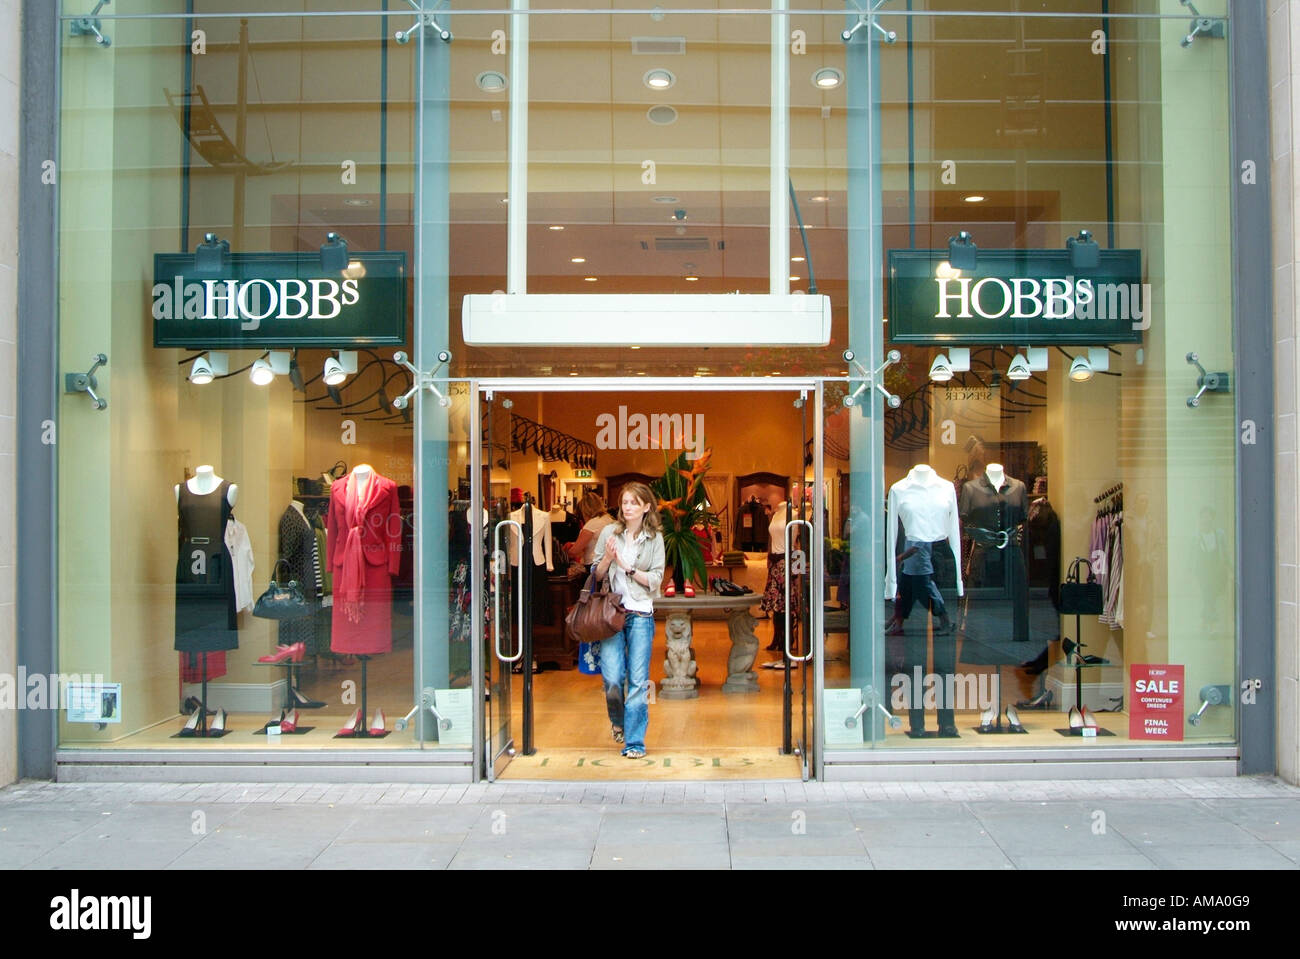 hobbs shop front Department store retail UK United Kingdom England ...